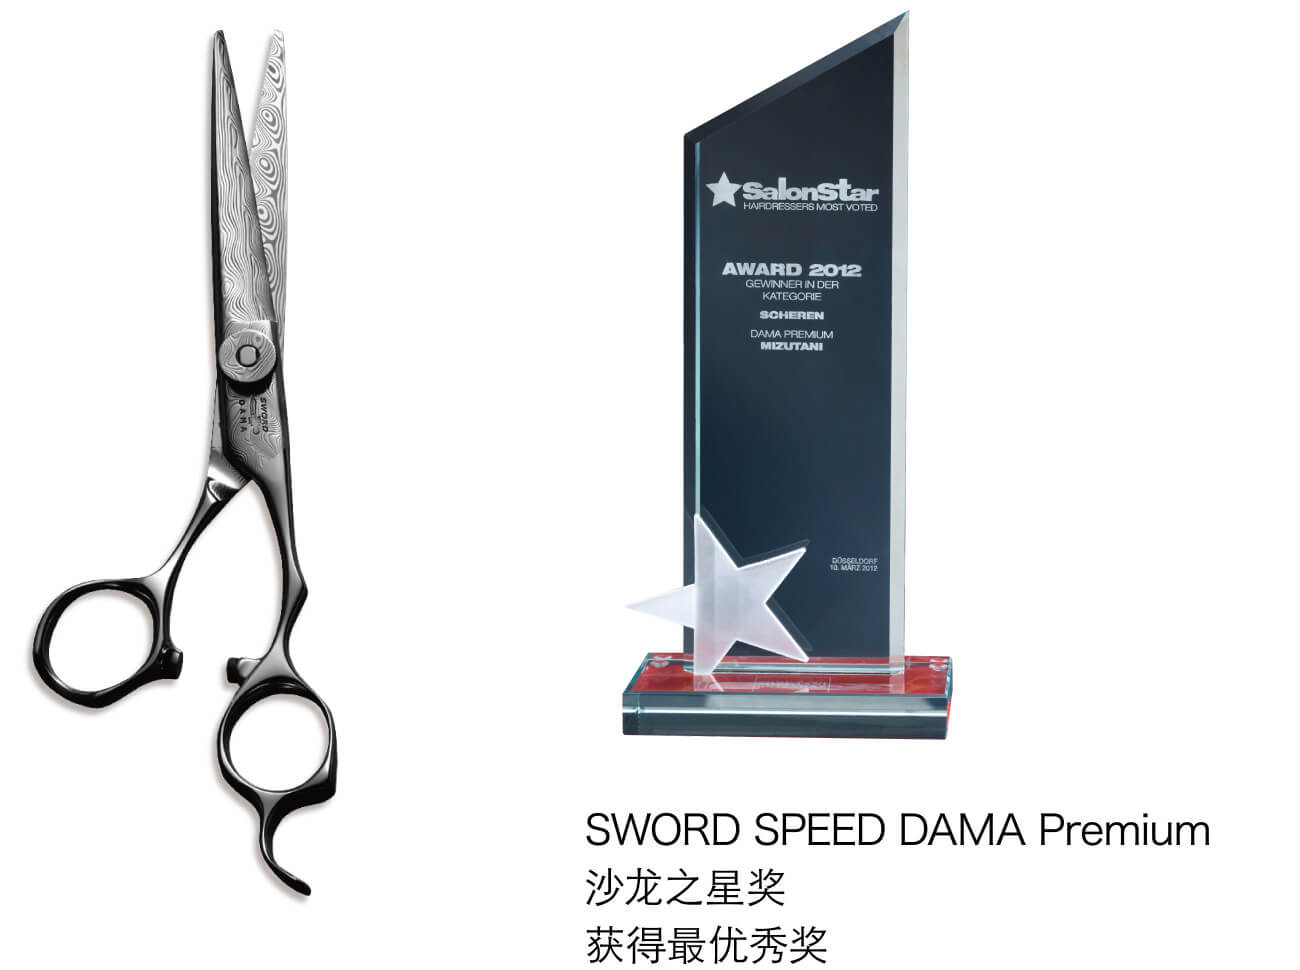 SWORD SPEED DAMA Premium 沙龙之星奖 获得最优秀奖